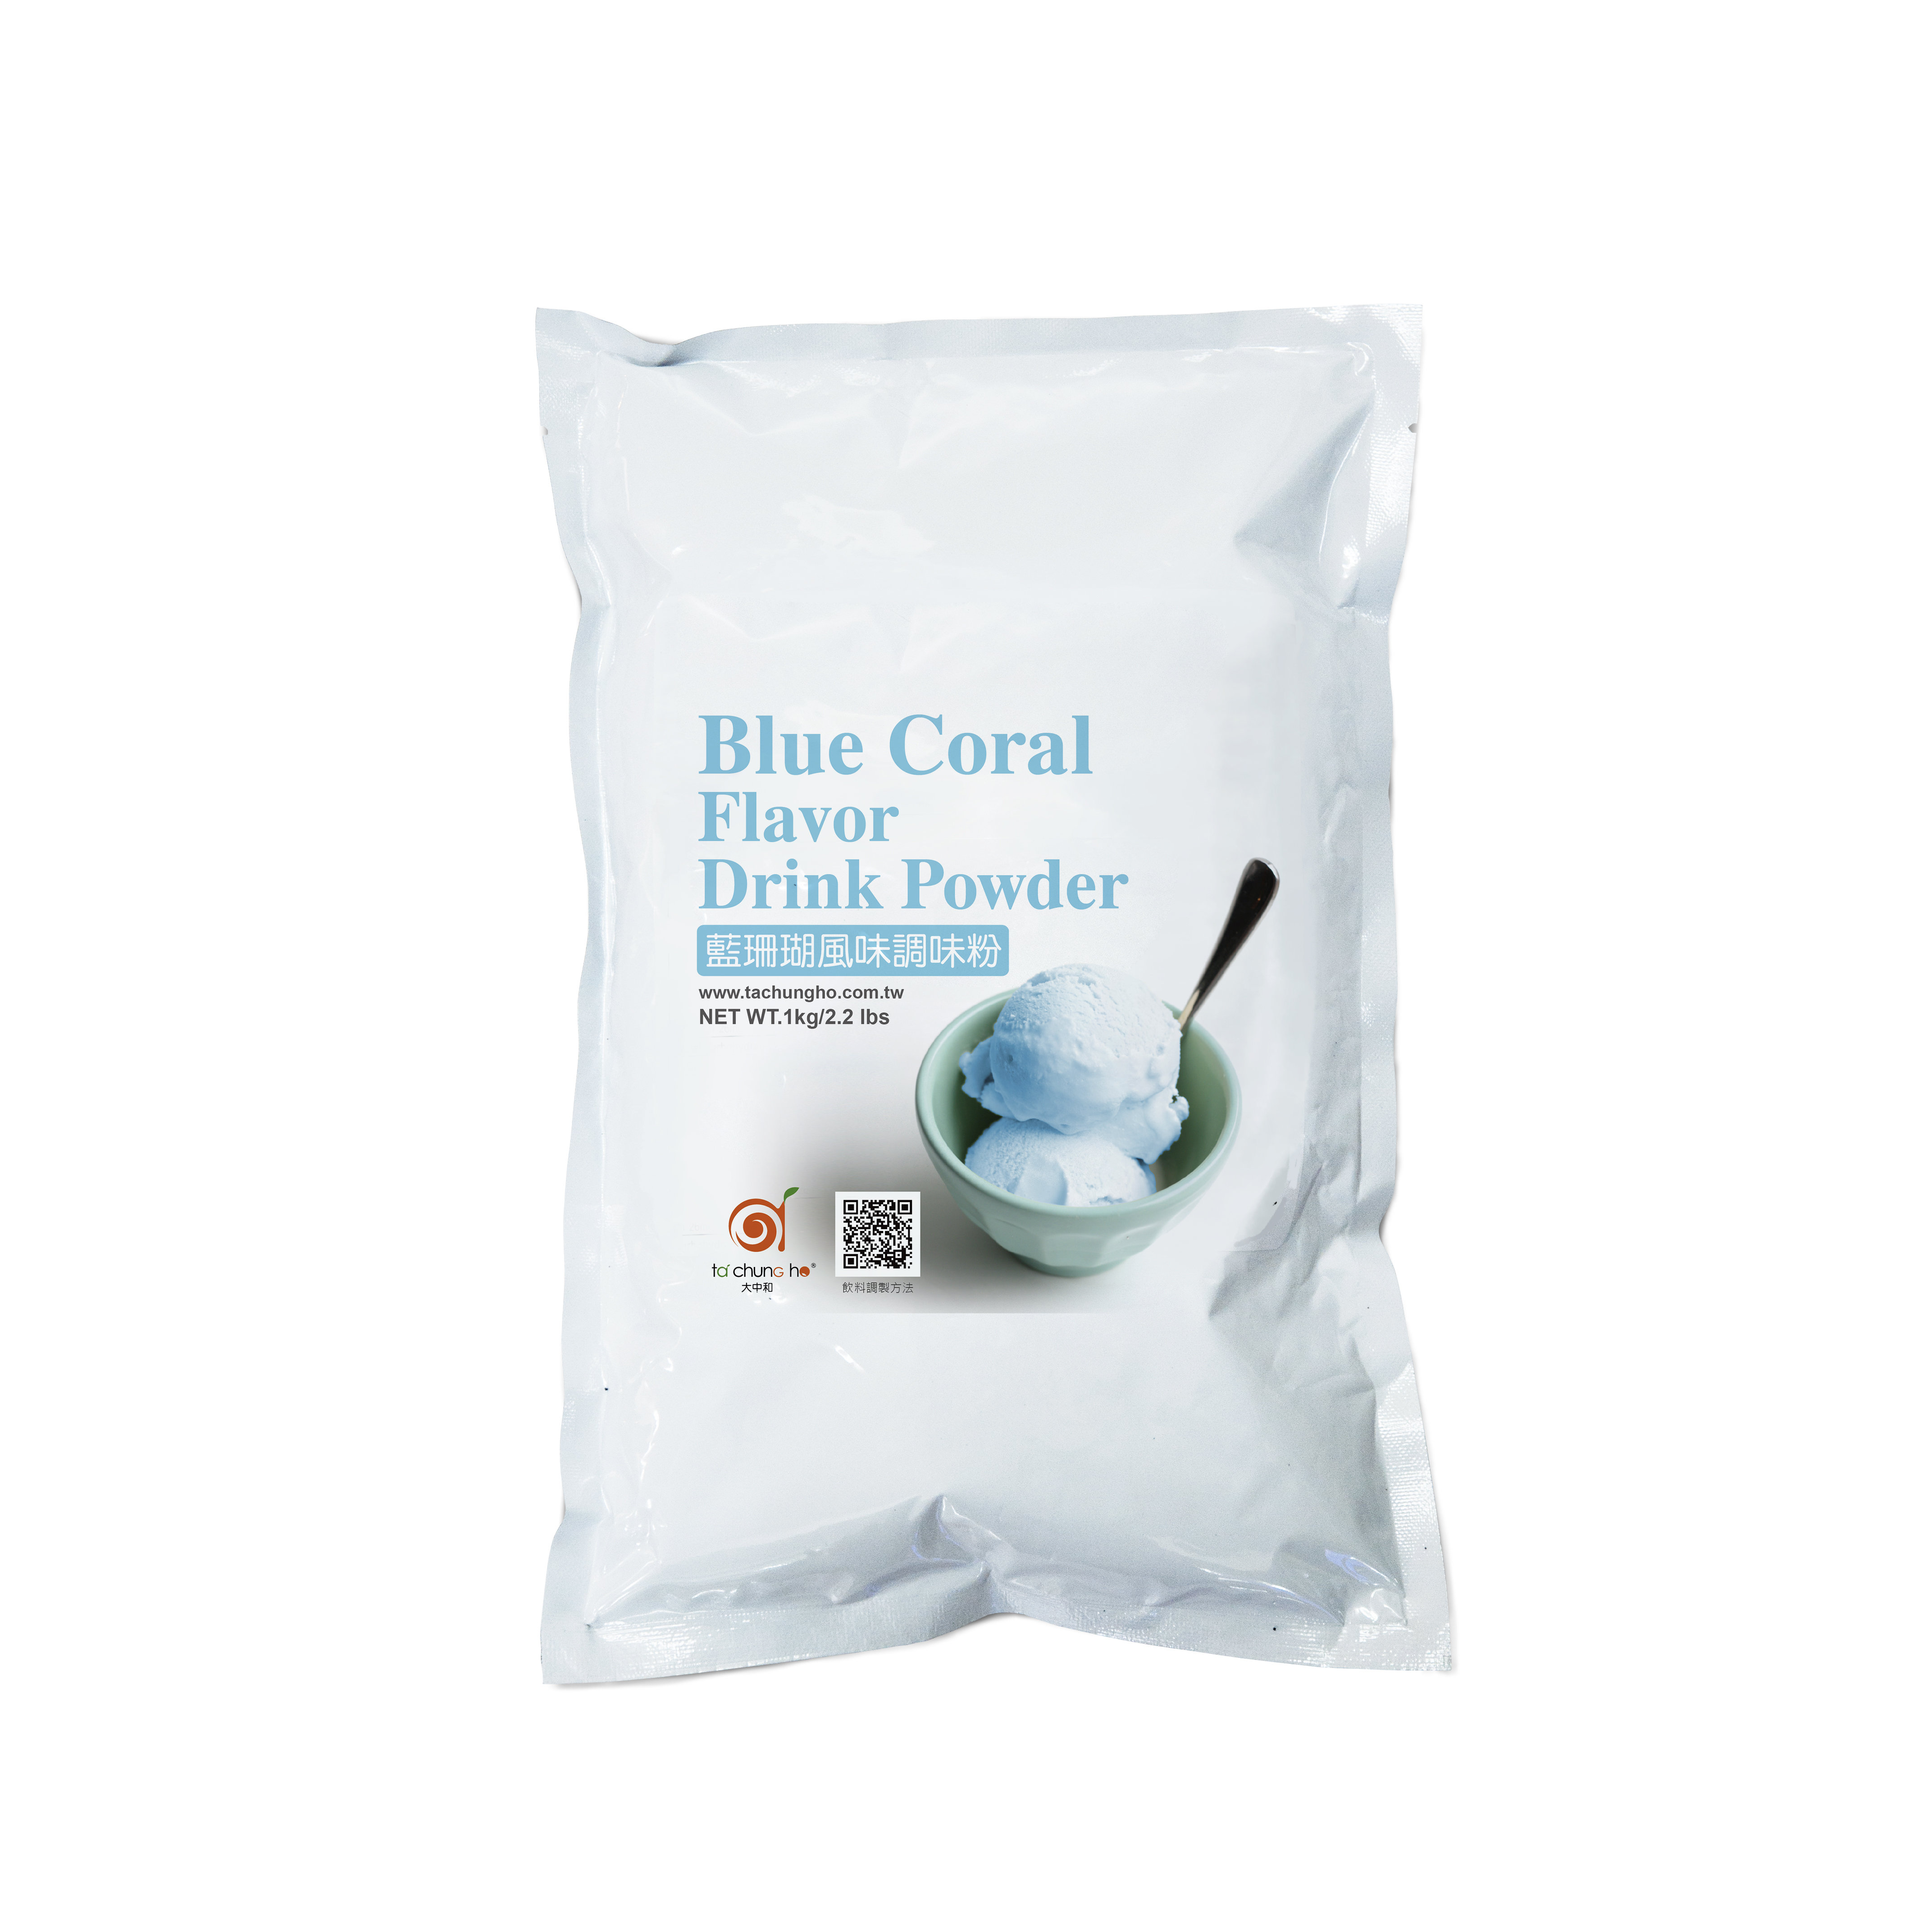 Blue Coral Flavor Drink Powder